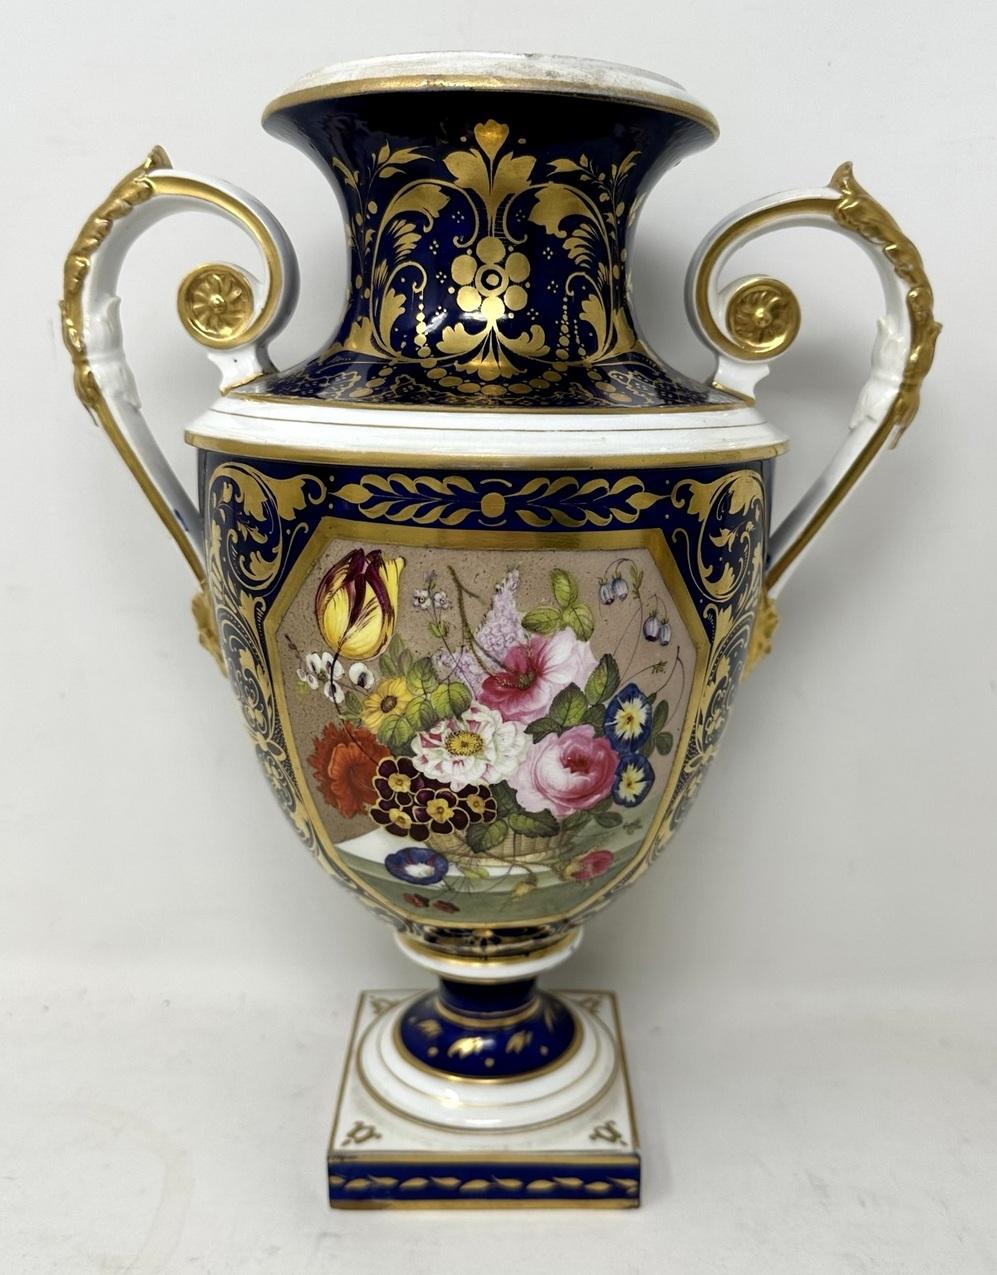 Ceramic Antique Garniture English Royal Crown Derby Porcelain Vases by Thomas Steel 19C  For Sale